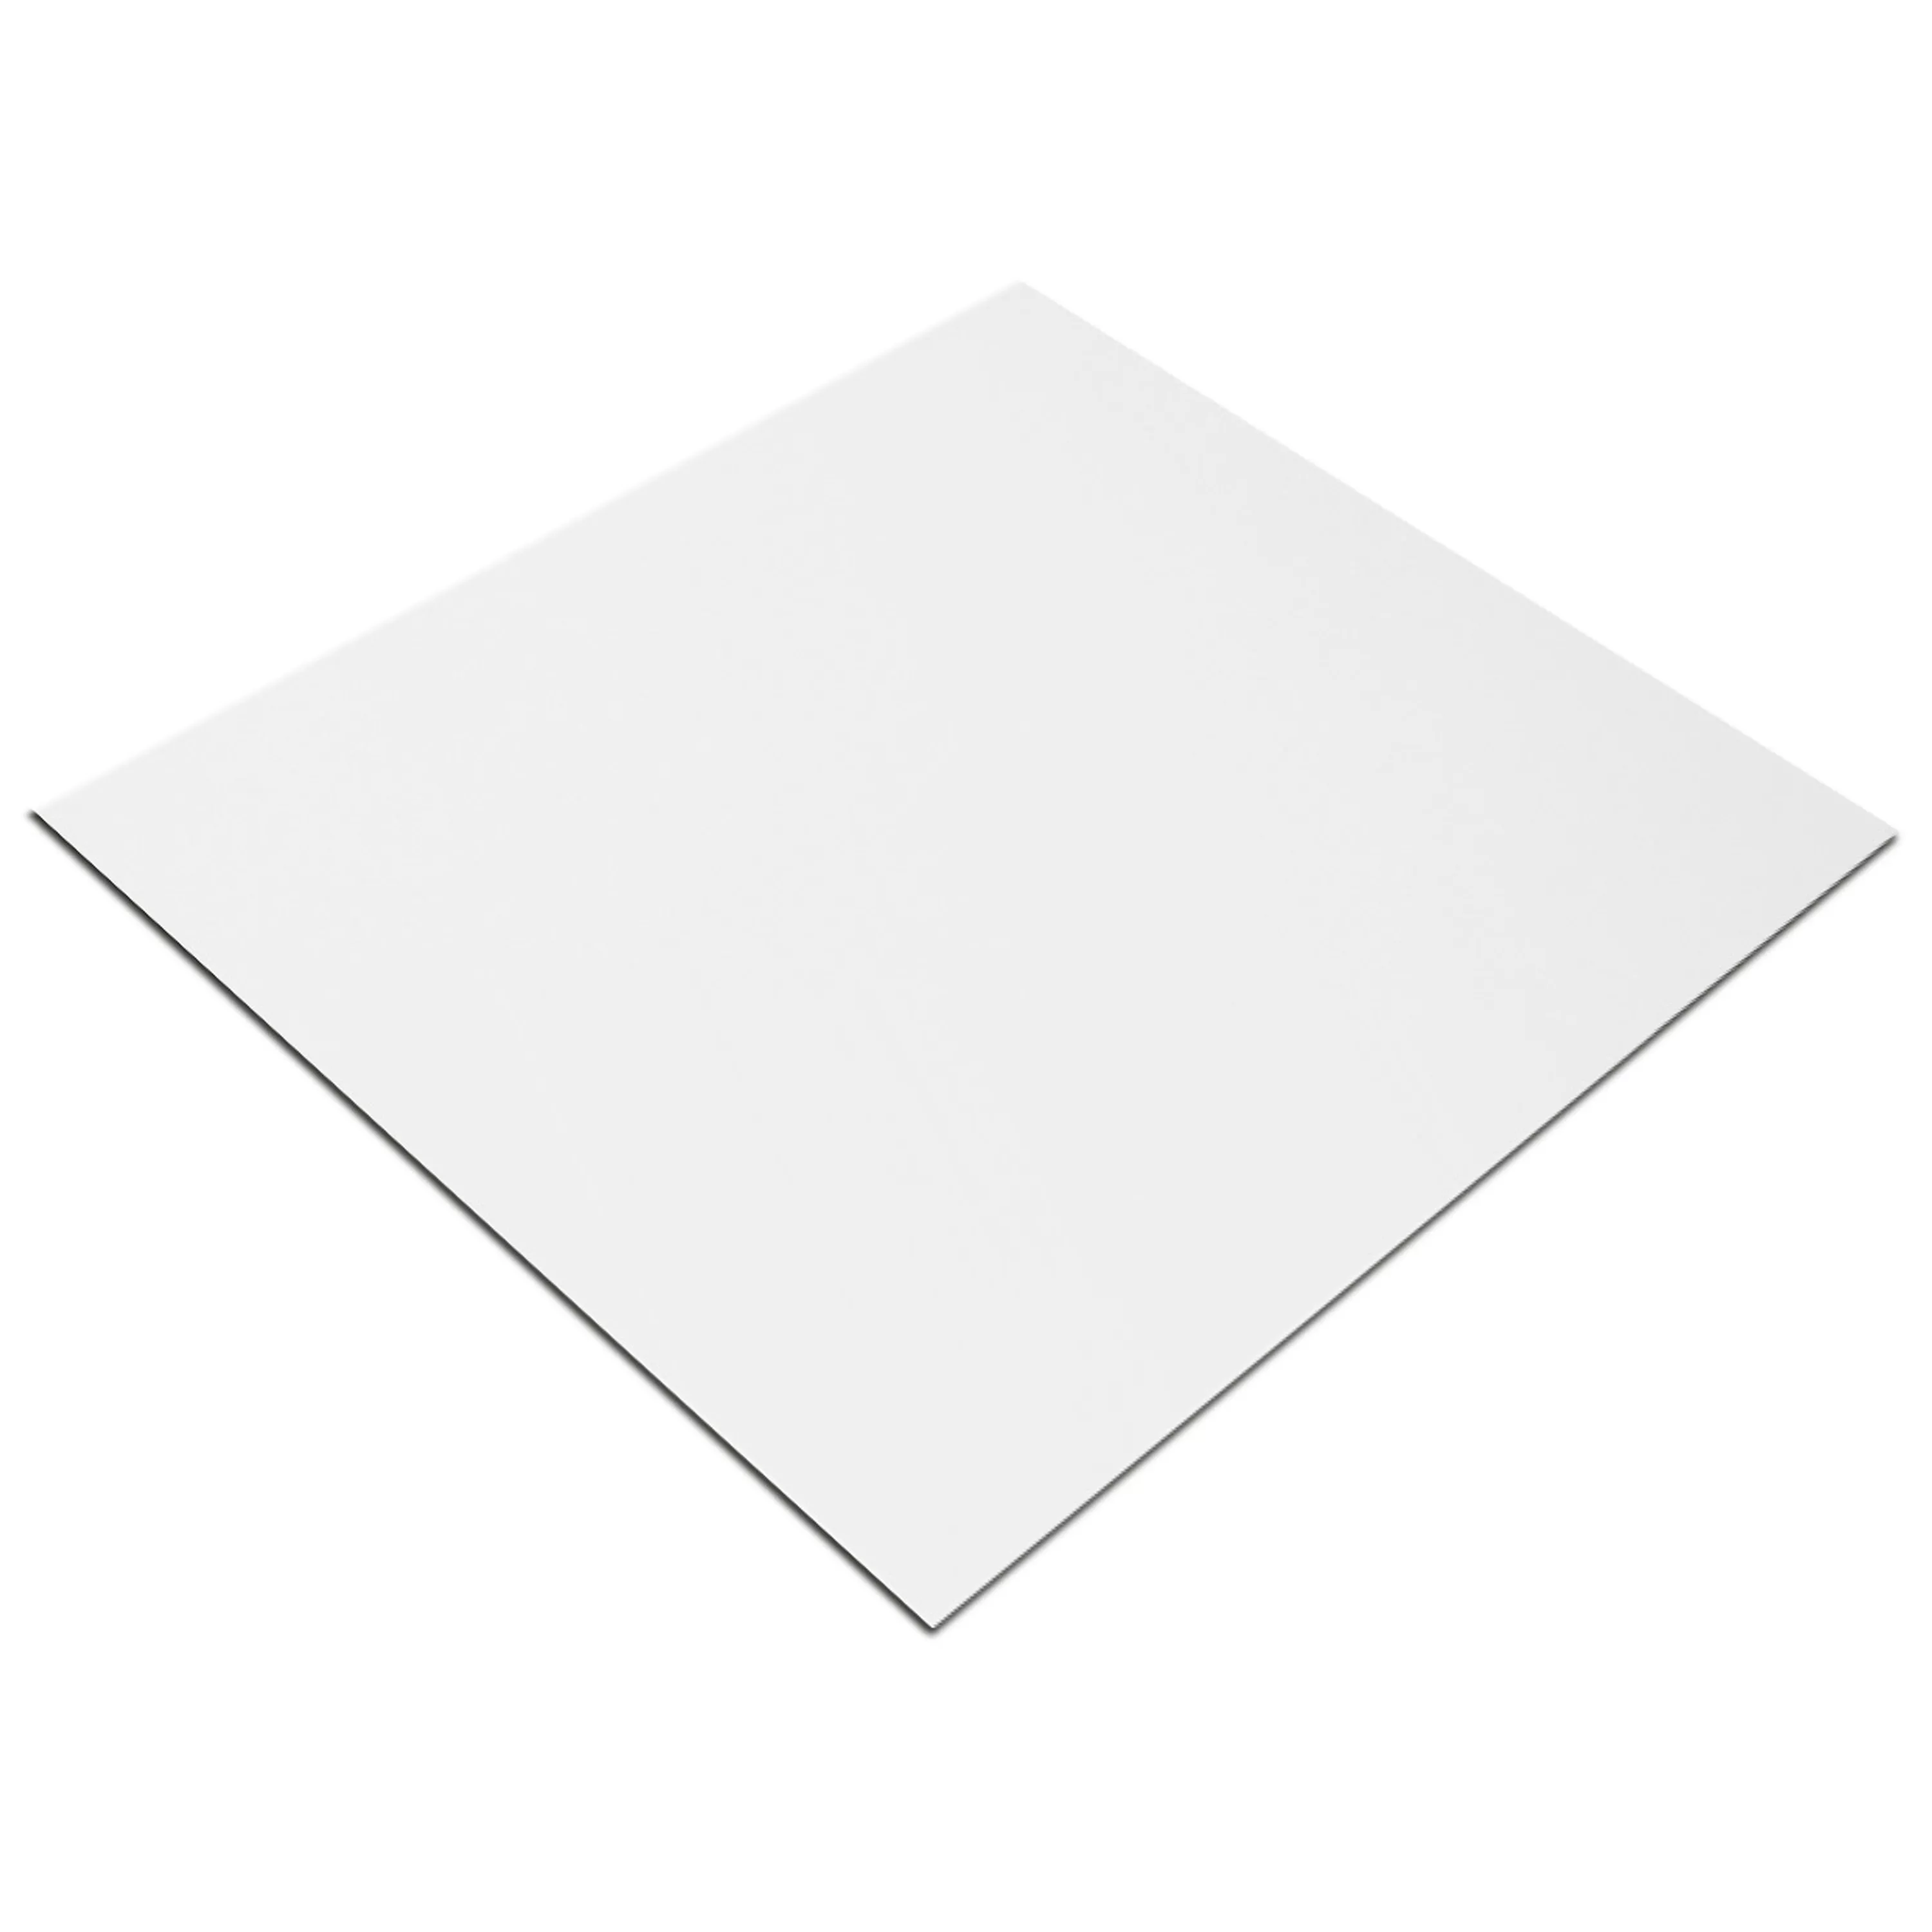 Sample Wall Tiles Fenway White Mat 20x60cm